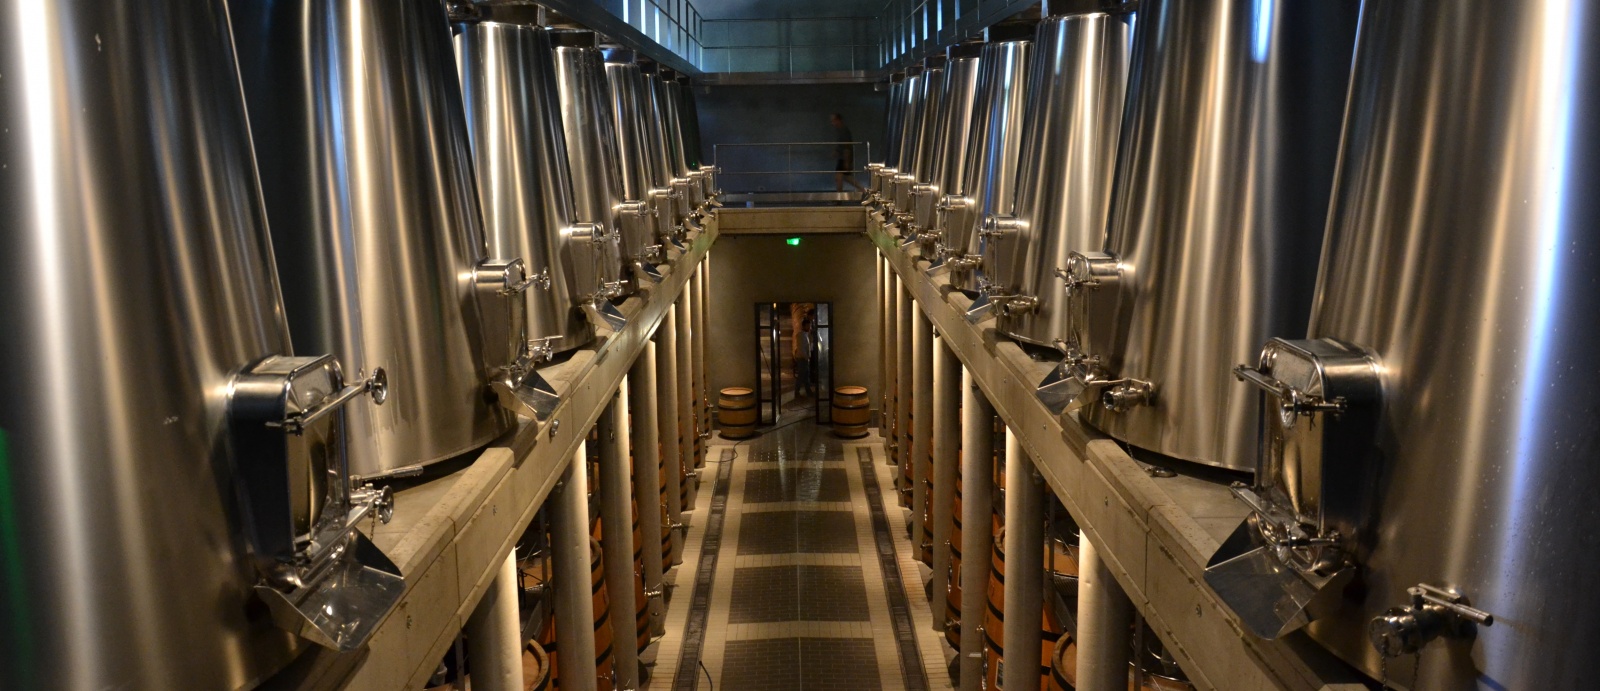 Our range of wine-making tanks